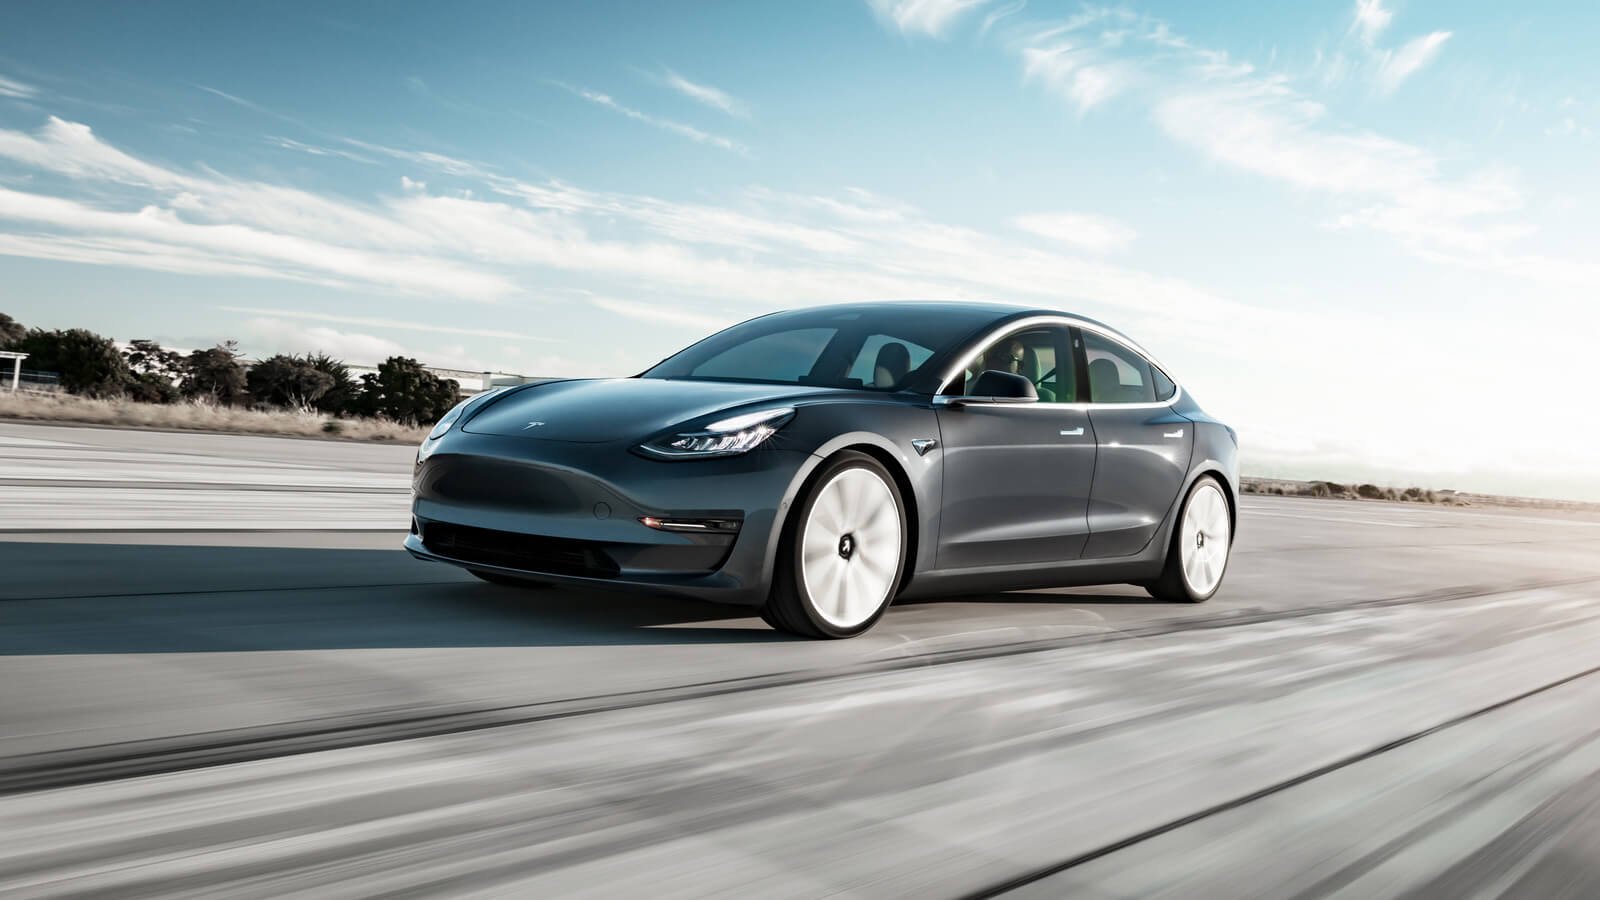 Tesla ยักษ์ใหญ่ด้านรถยนต์ EV กำลังวิกฤต ? หุ้นร่วง 32% กำไรลดลง 40% 